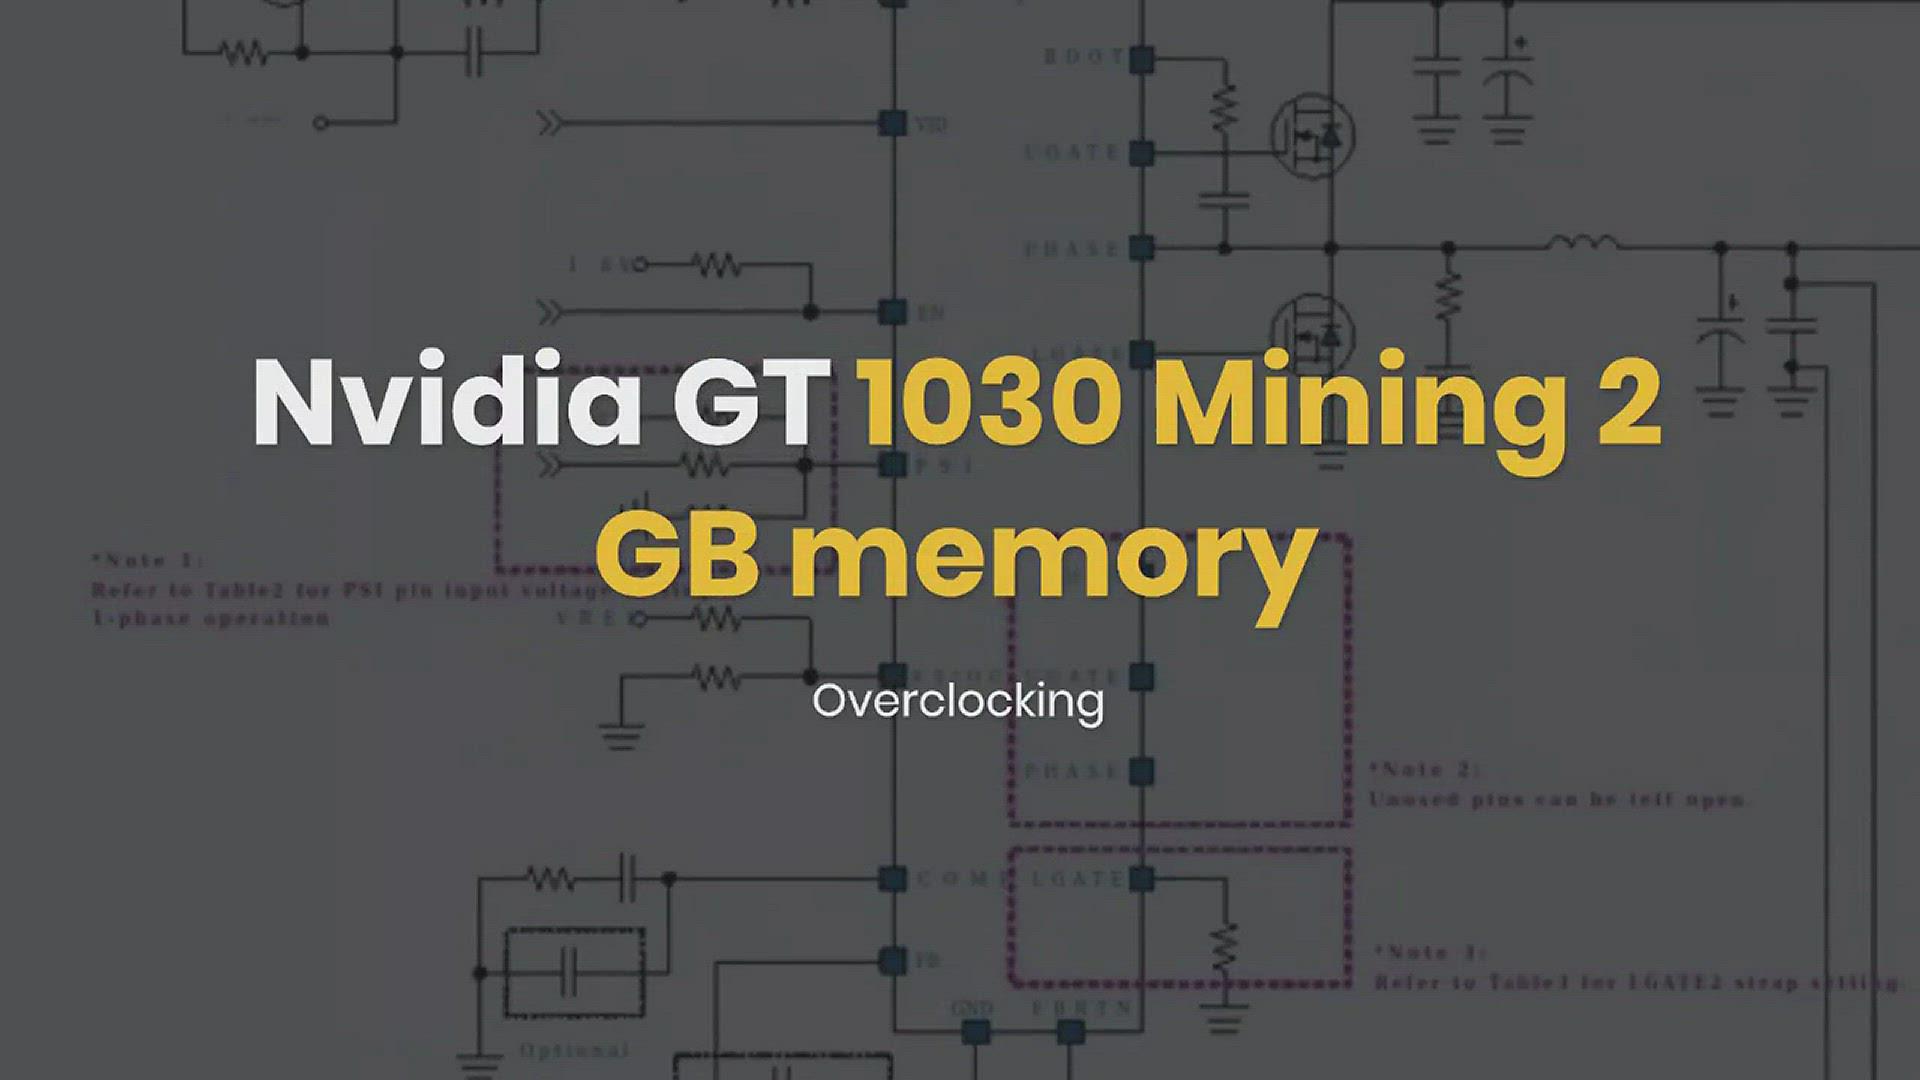 'Video thumbnail for Nvidia GT 1030 Mining 2 GB memory: Overclocking '